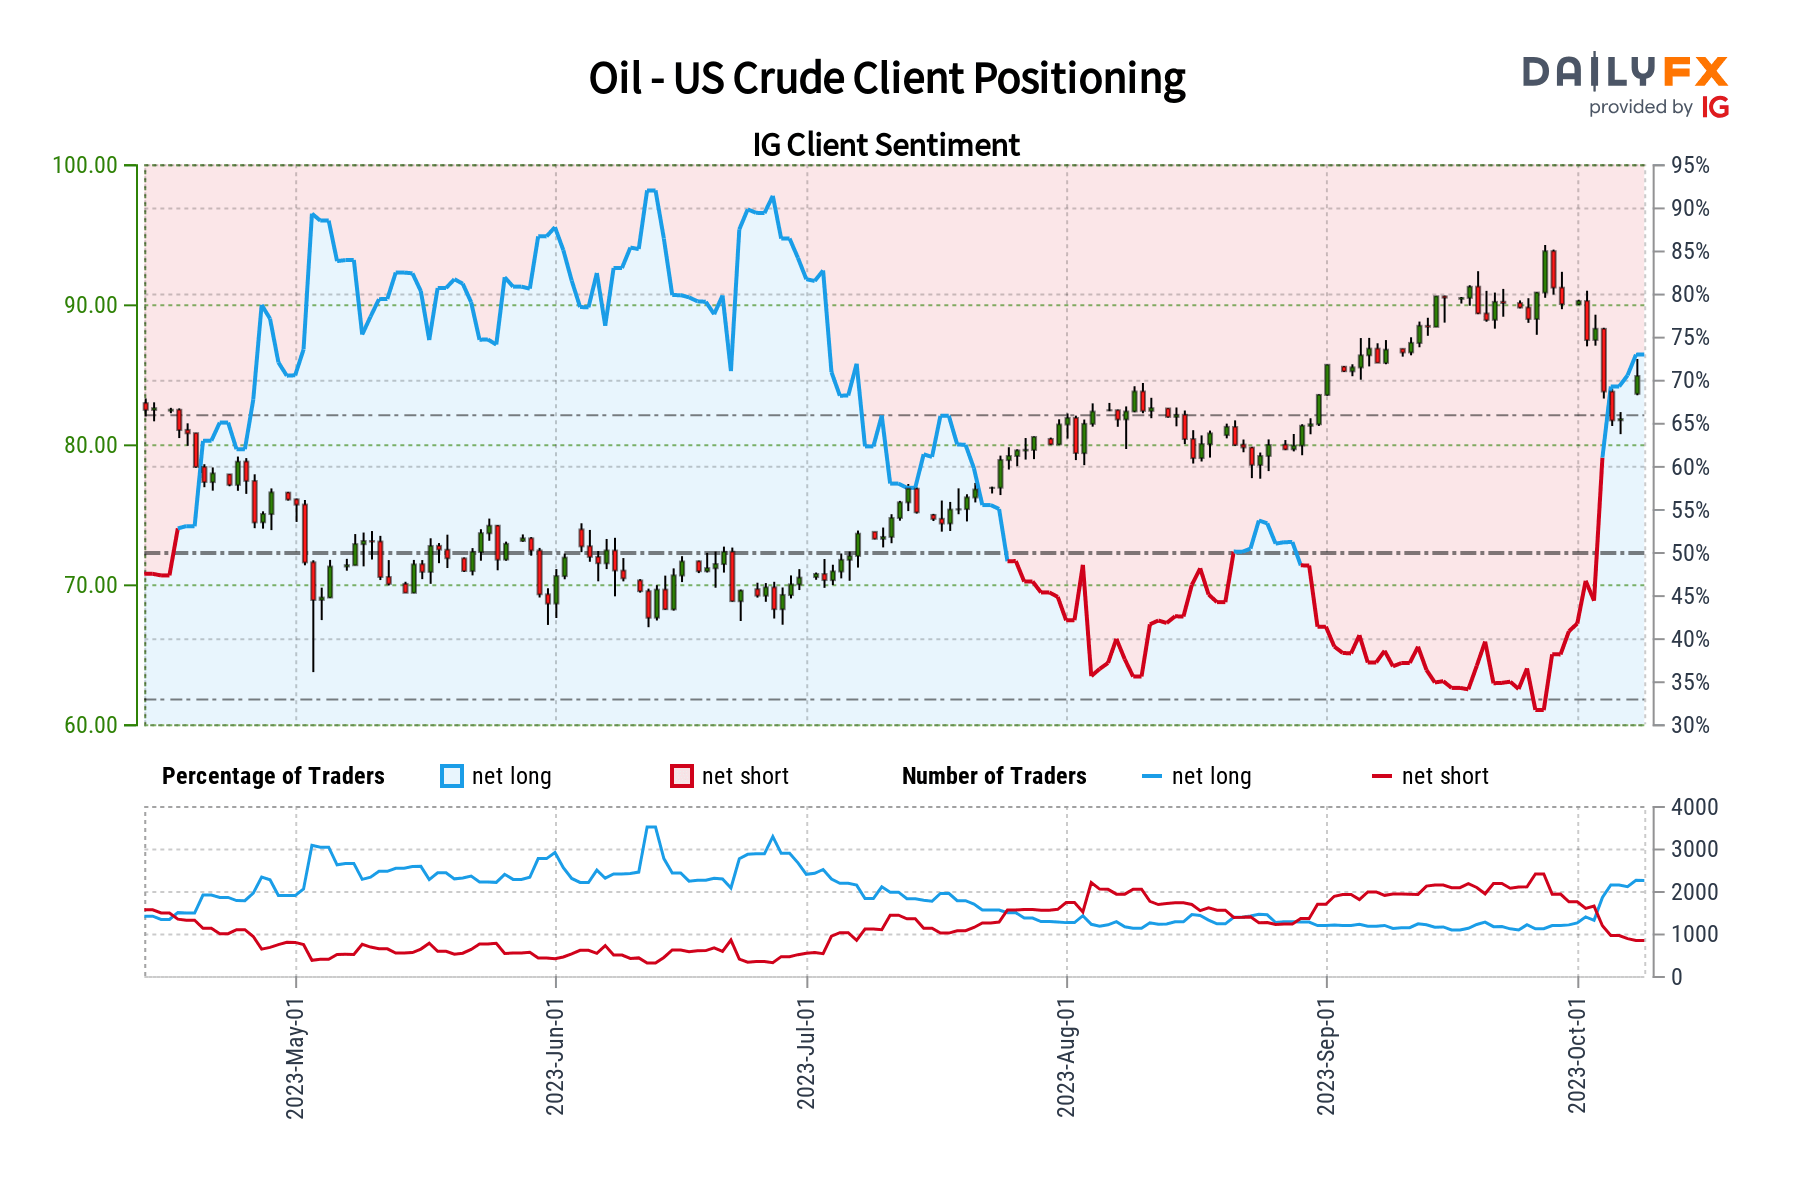 Crude Oil Sentiment Outlook - Bearish